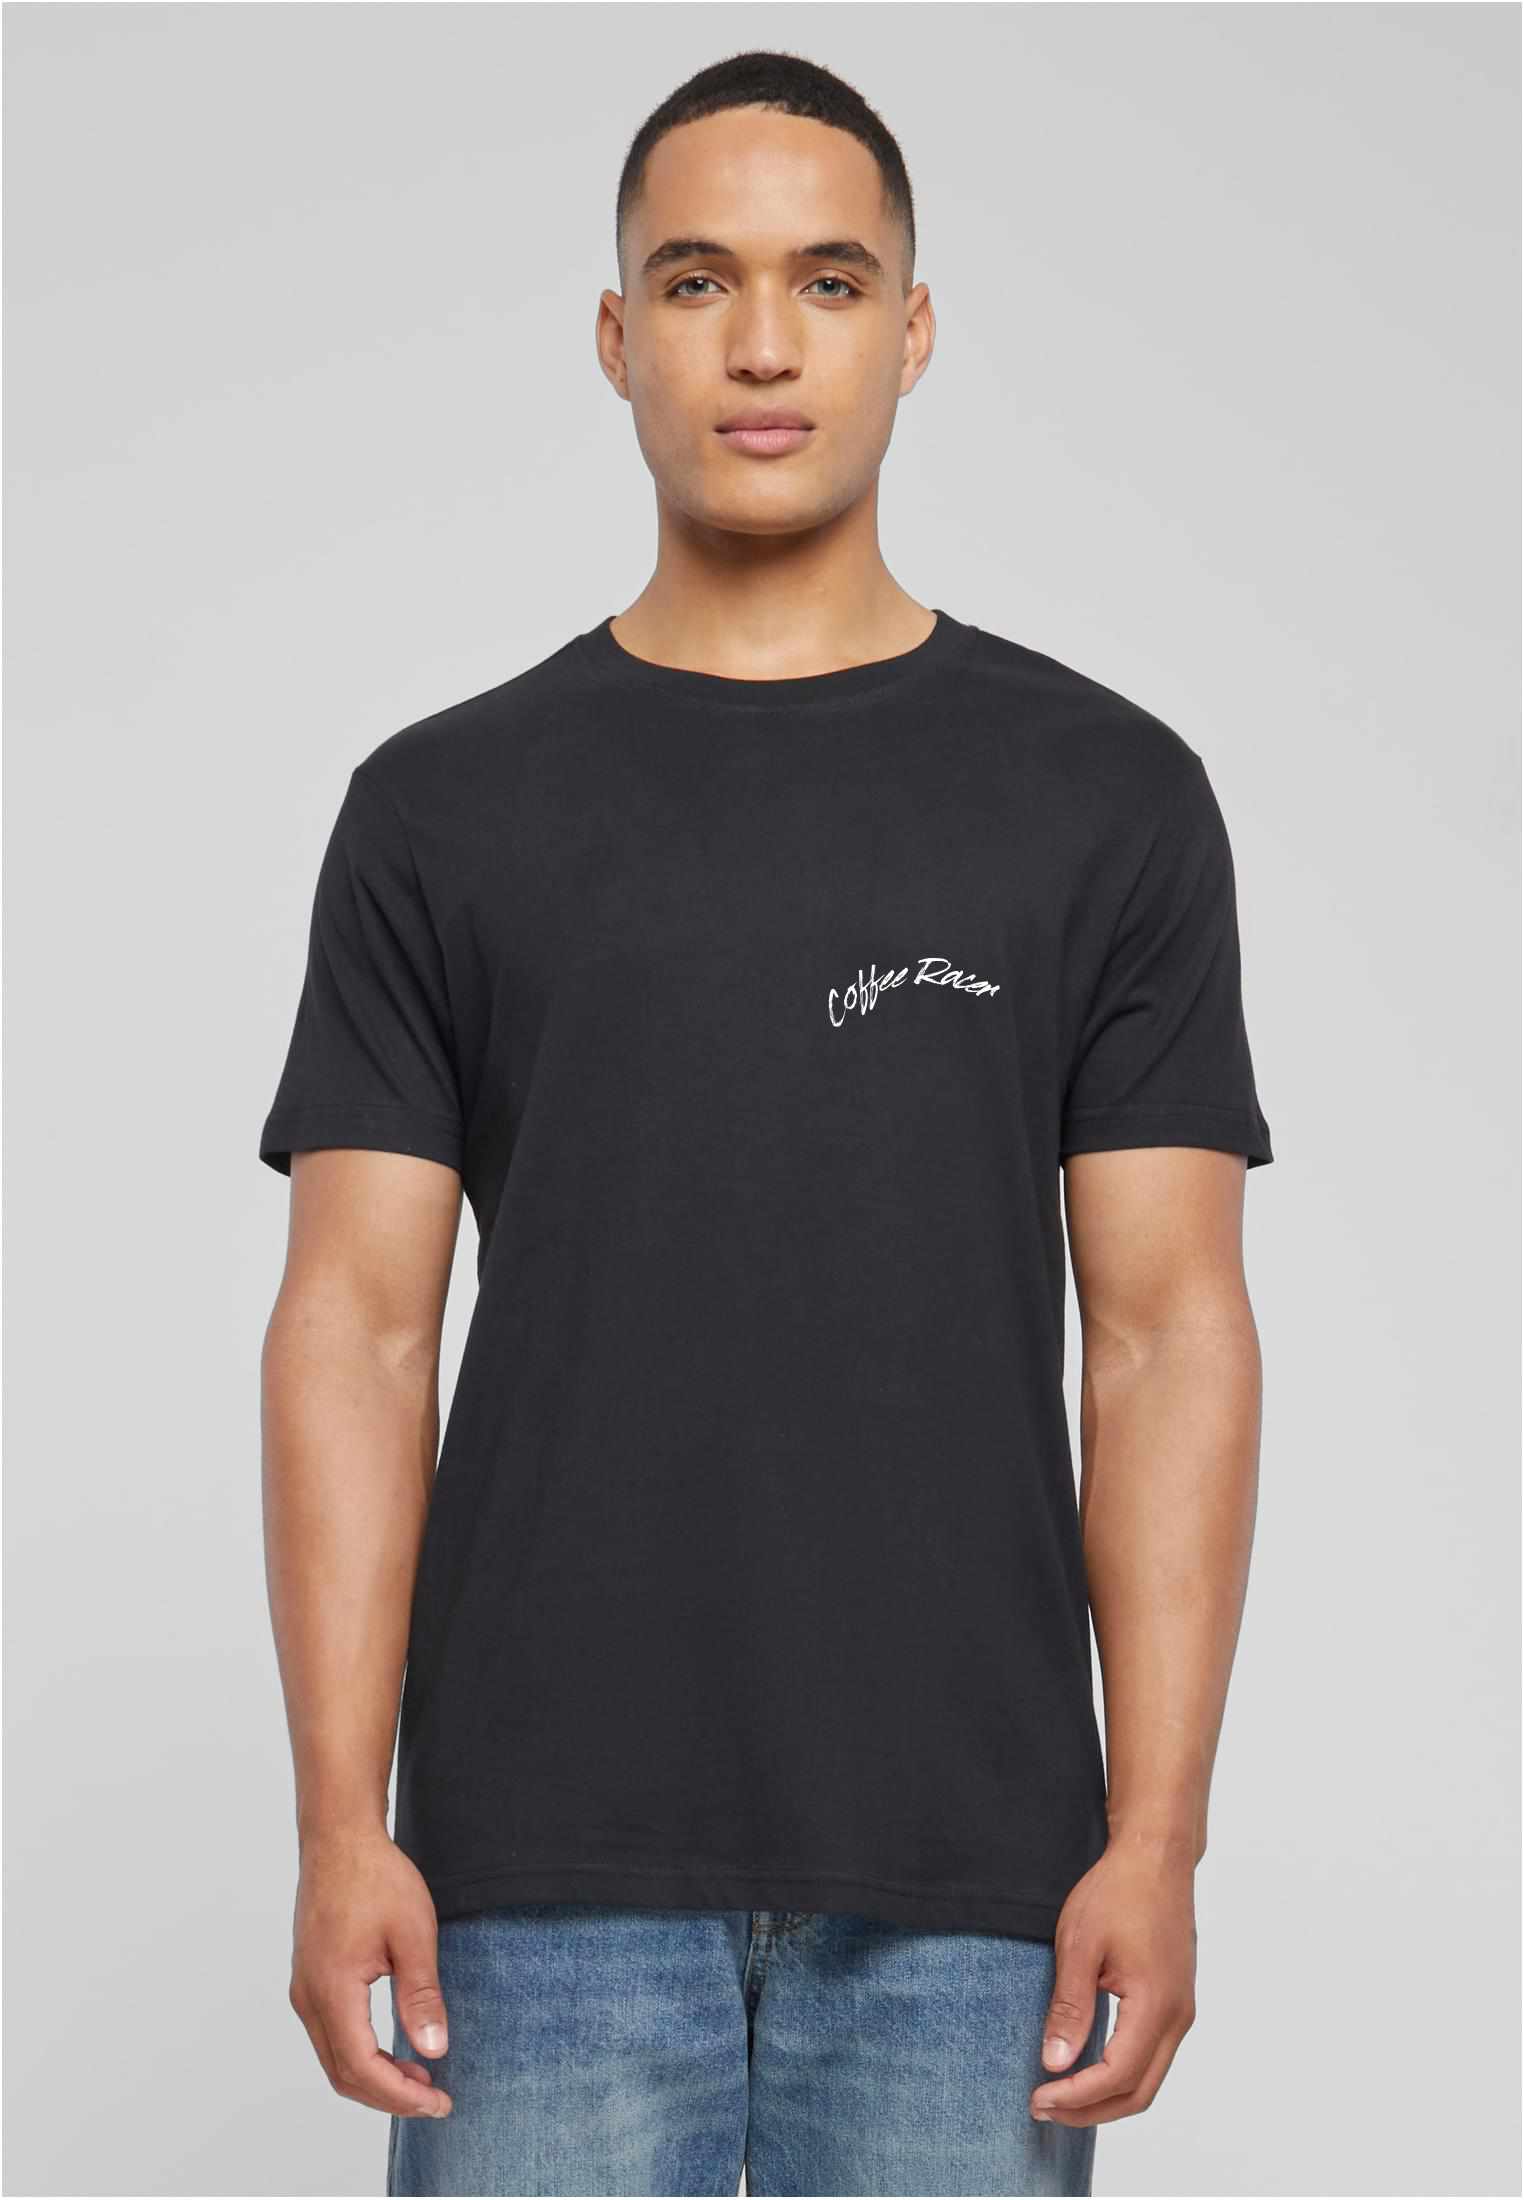 OV-Style CoffeeRacer Shirt Black